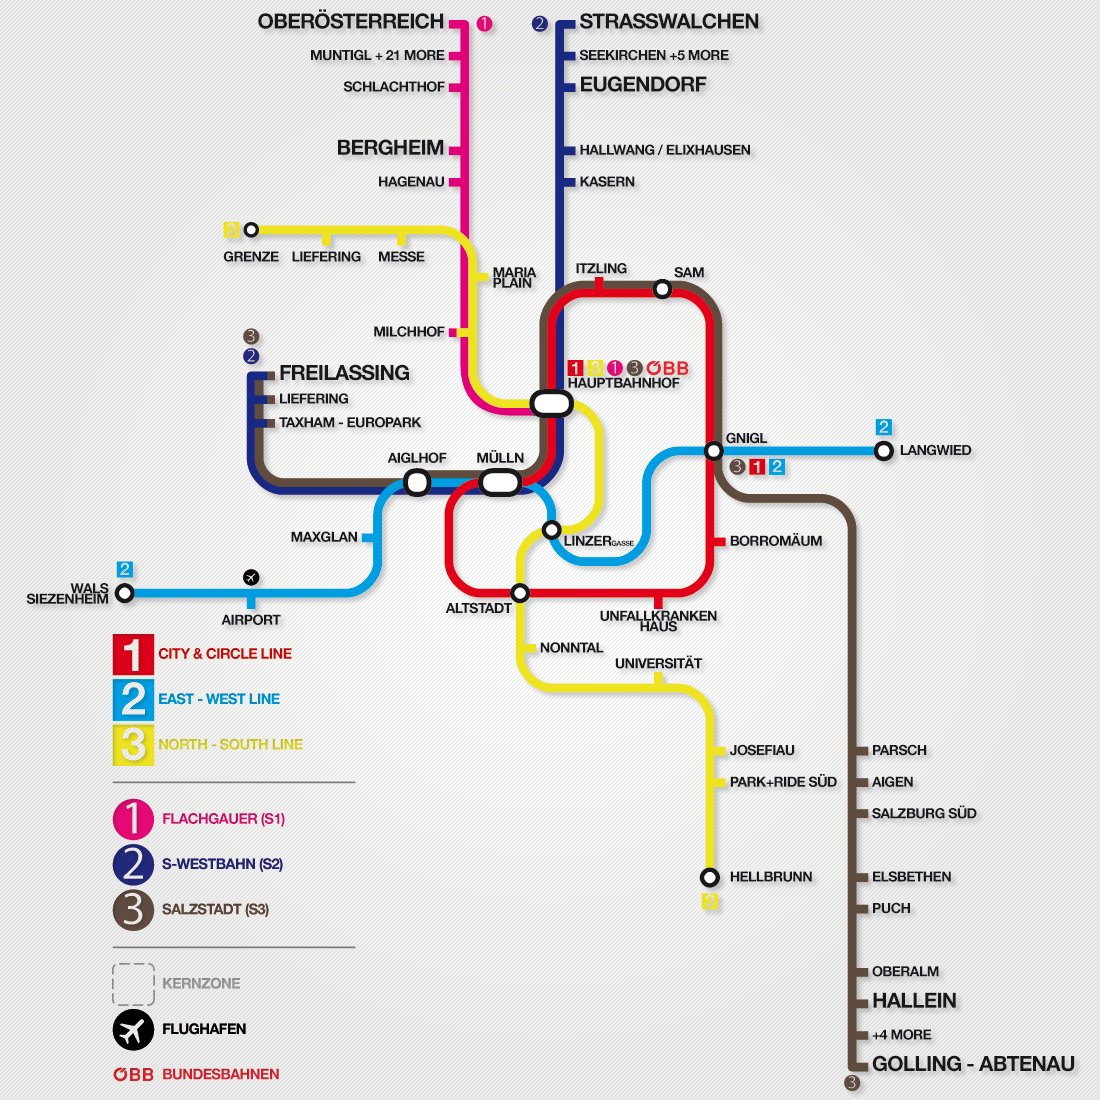 metro underground Overground Transport transport system subway trains public transport